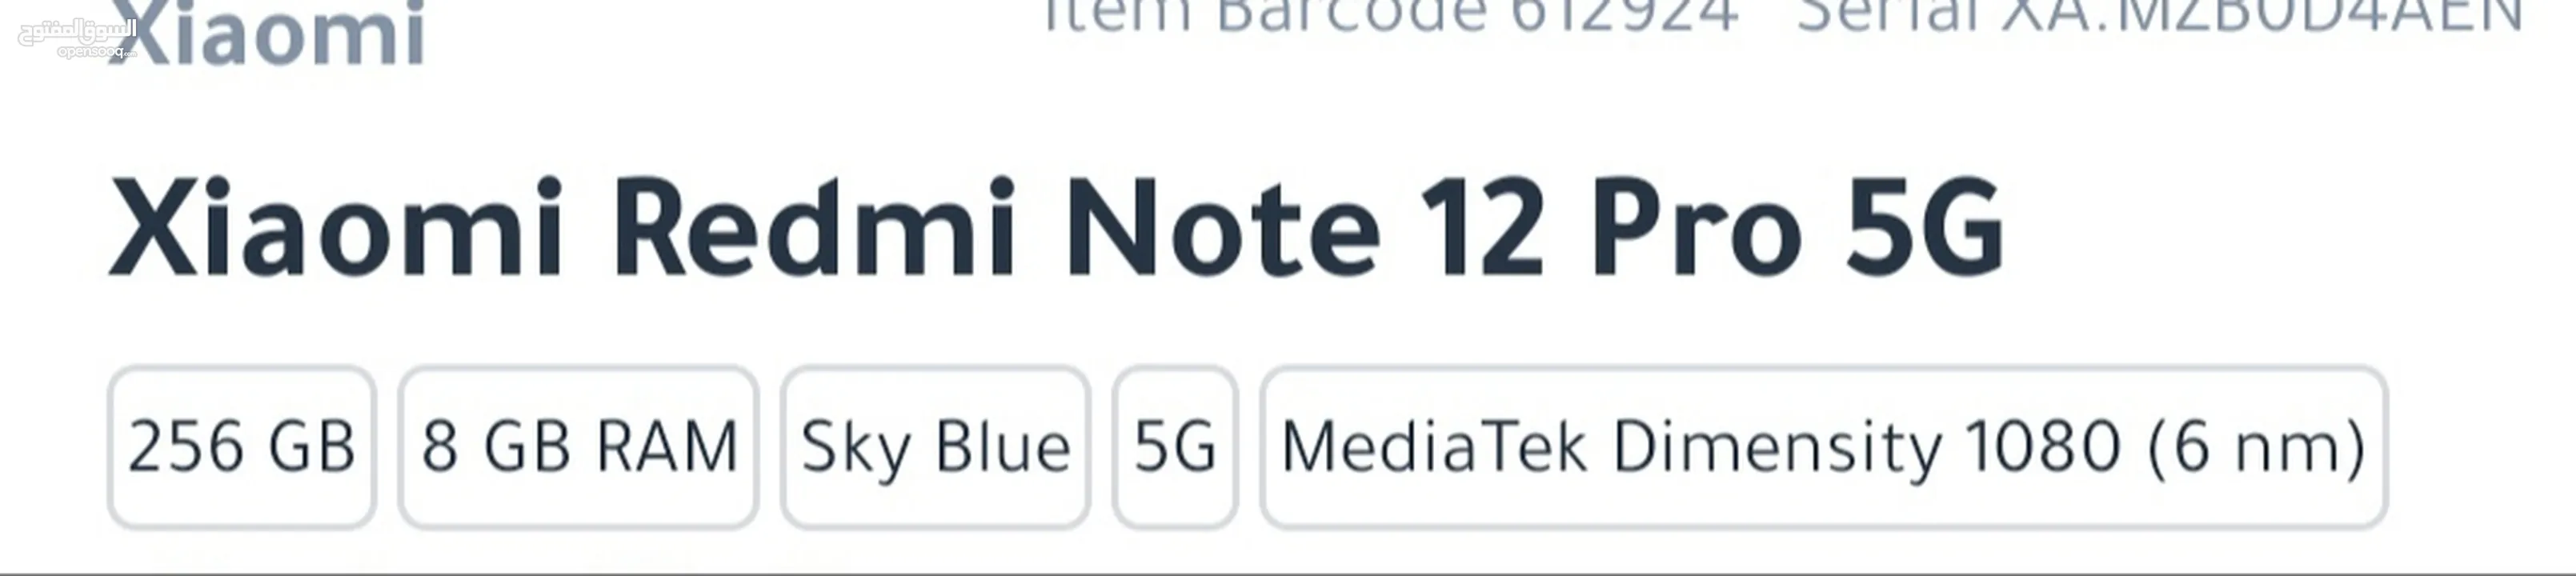 Redmi note 12 pro 5g blue 8+4gb 256 gb